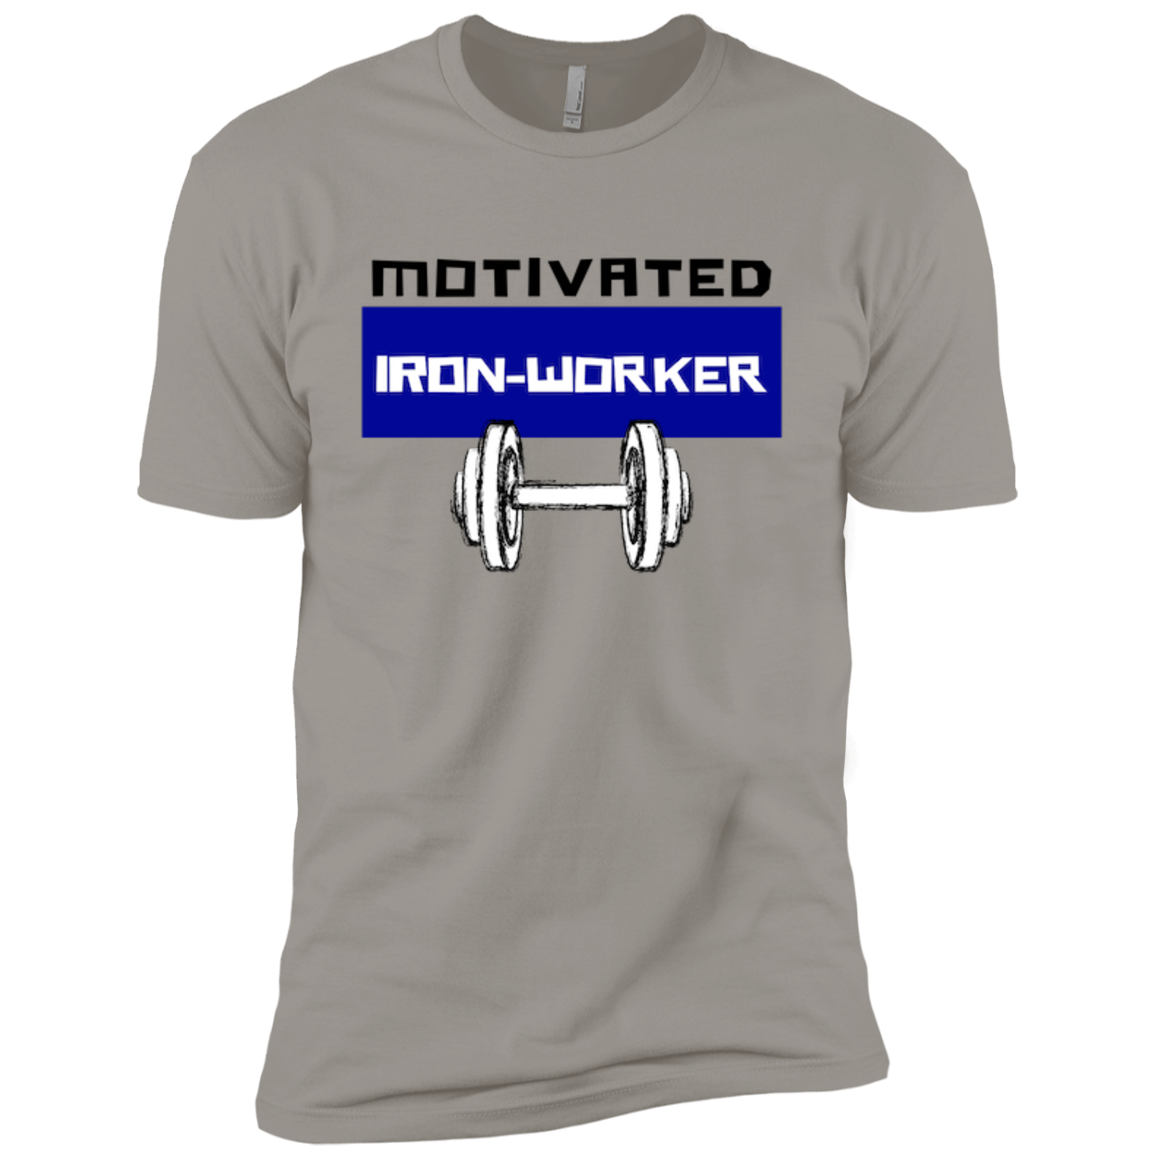 Motivated Iron Worker T-Shirt